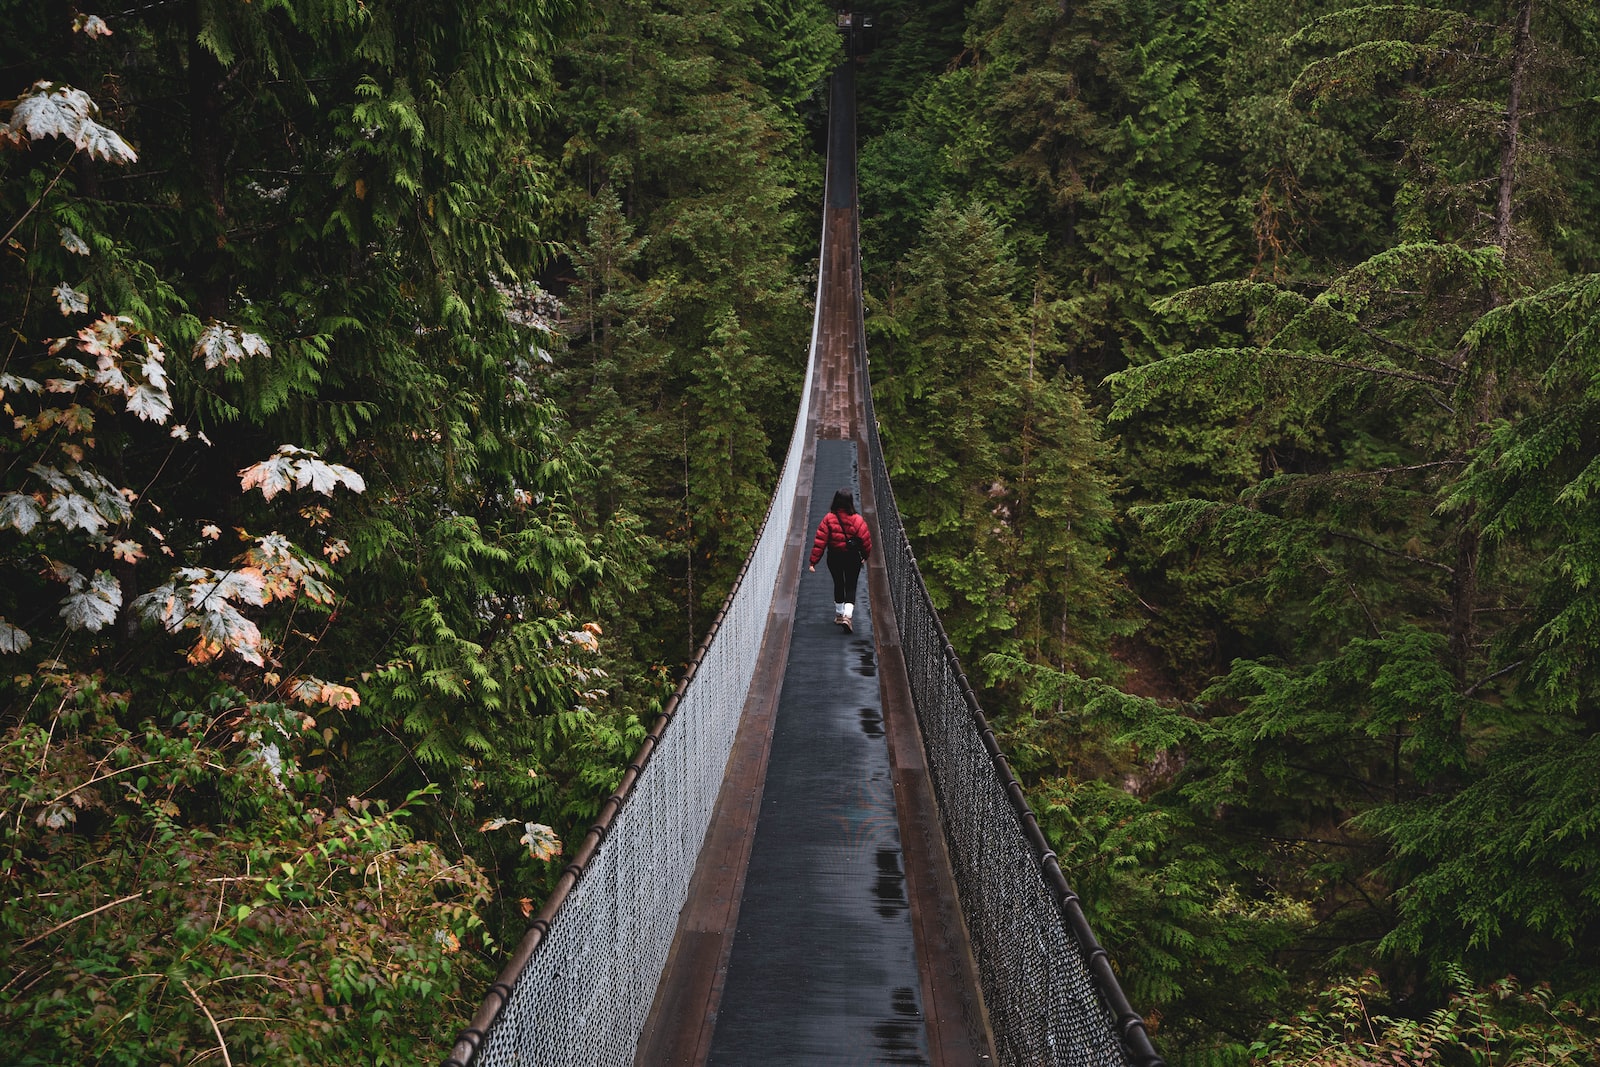 a man walking across a suspension bridge in a forest